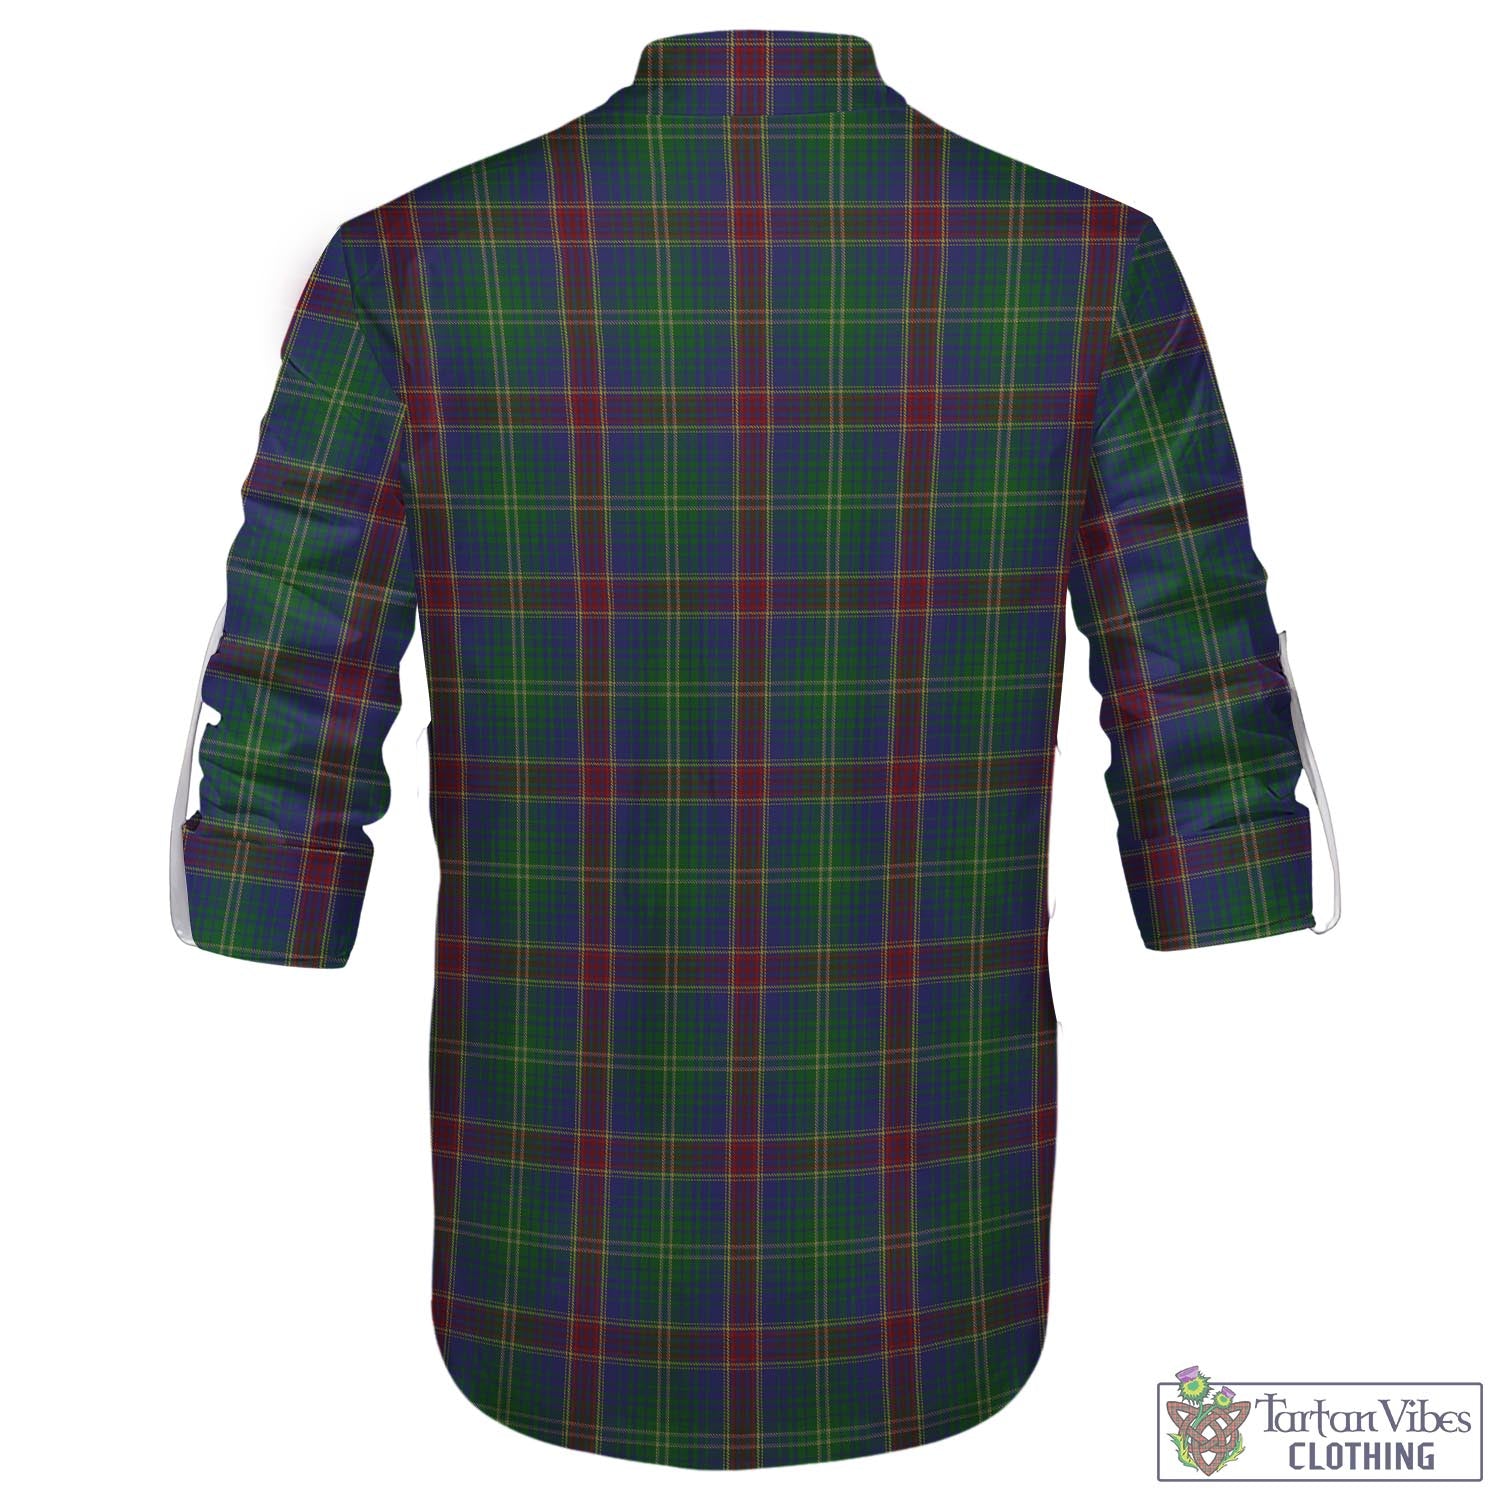 Tartan Vibes Clothing Hart of Scotland Tartan Men's Scottish Traditional Jacobite Ghillie Kilt Shirt